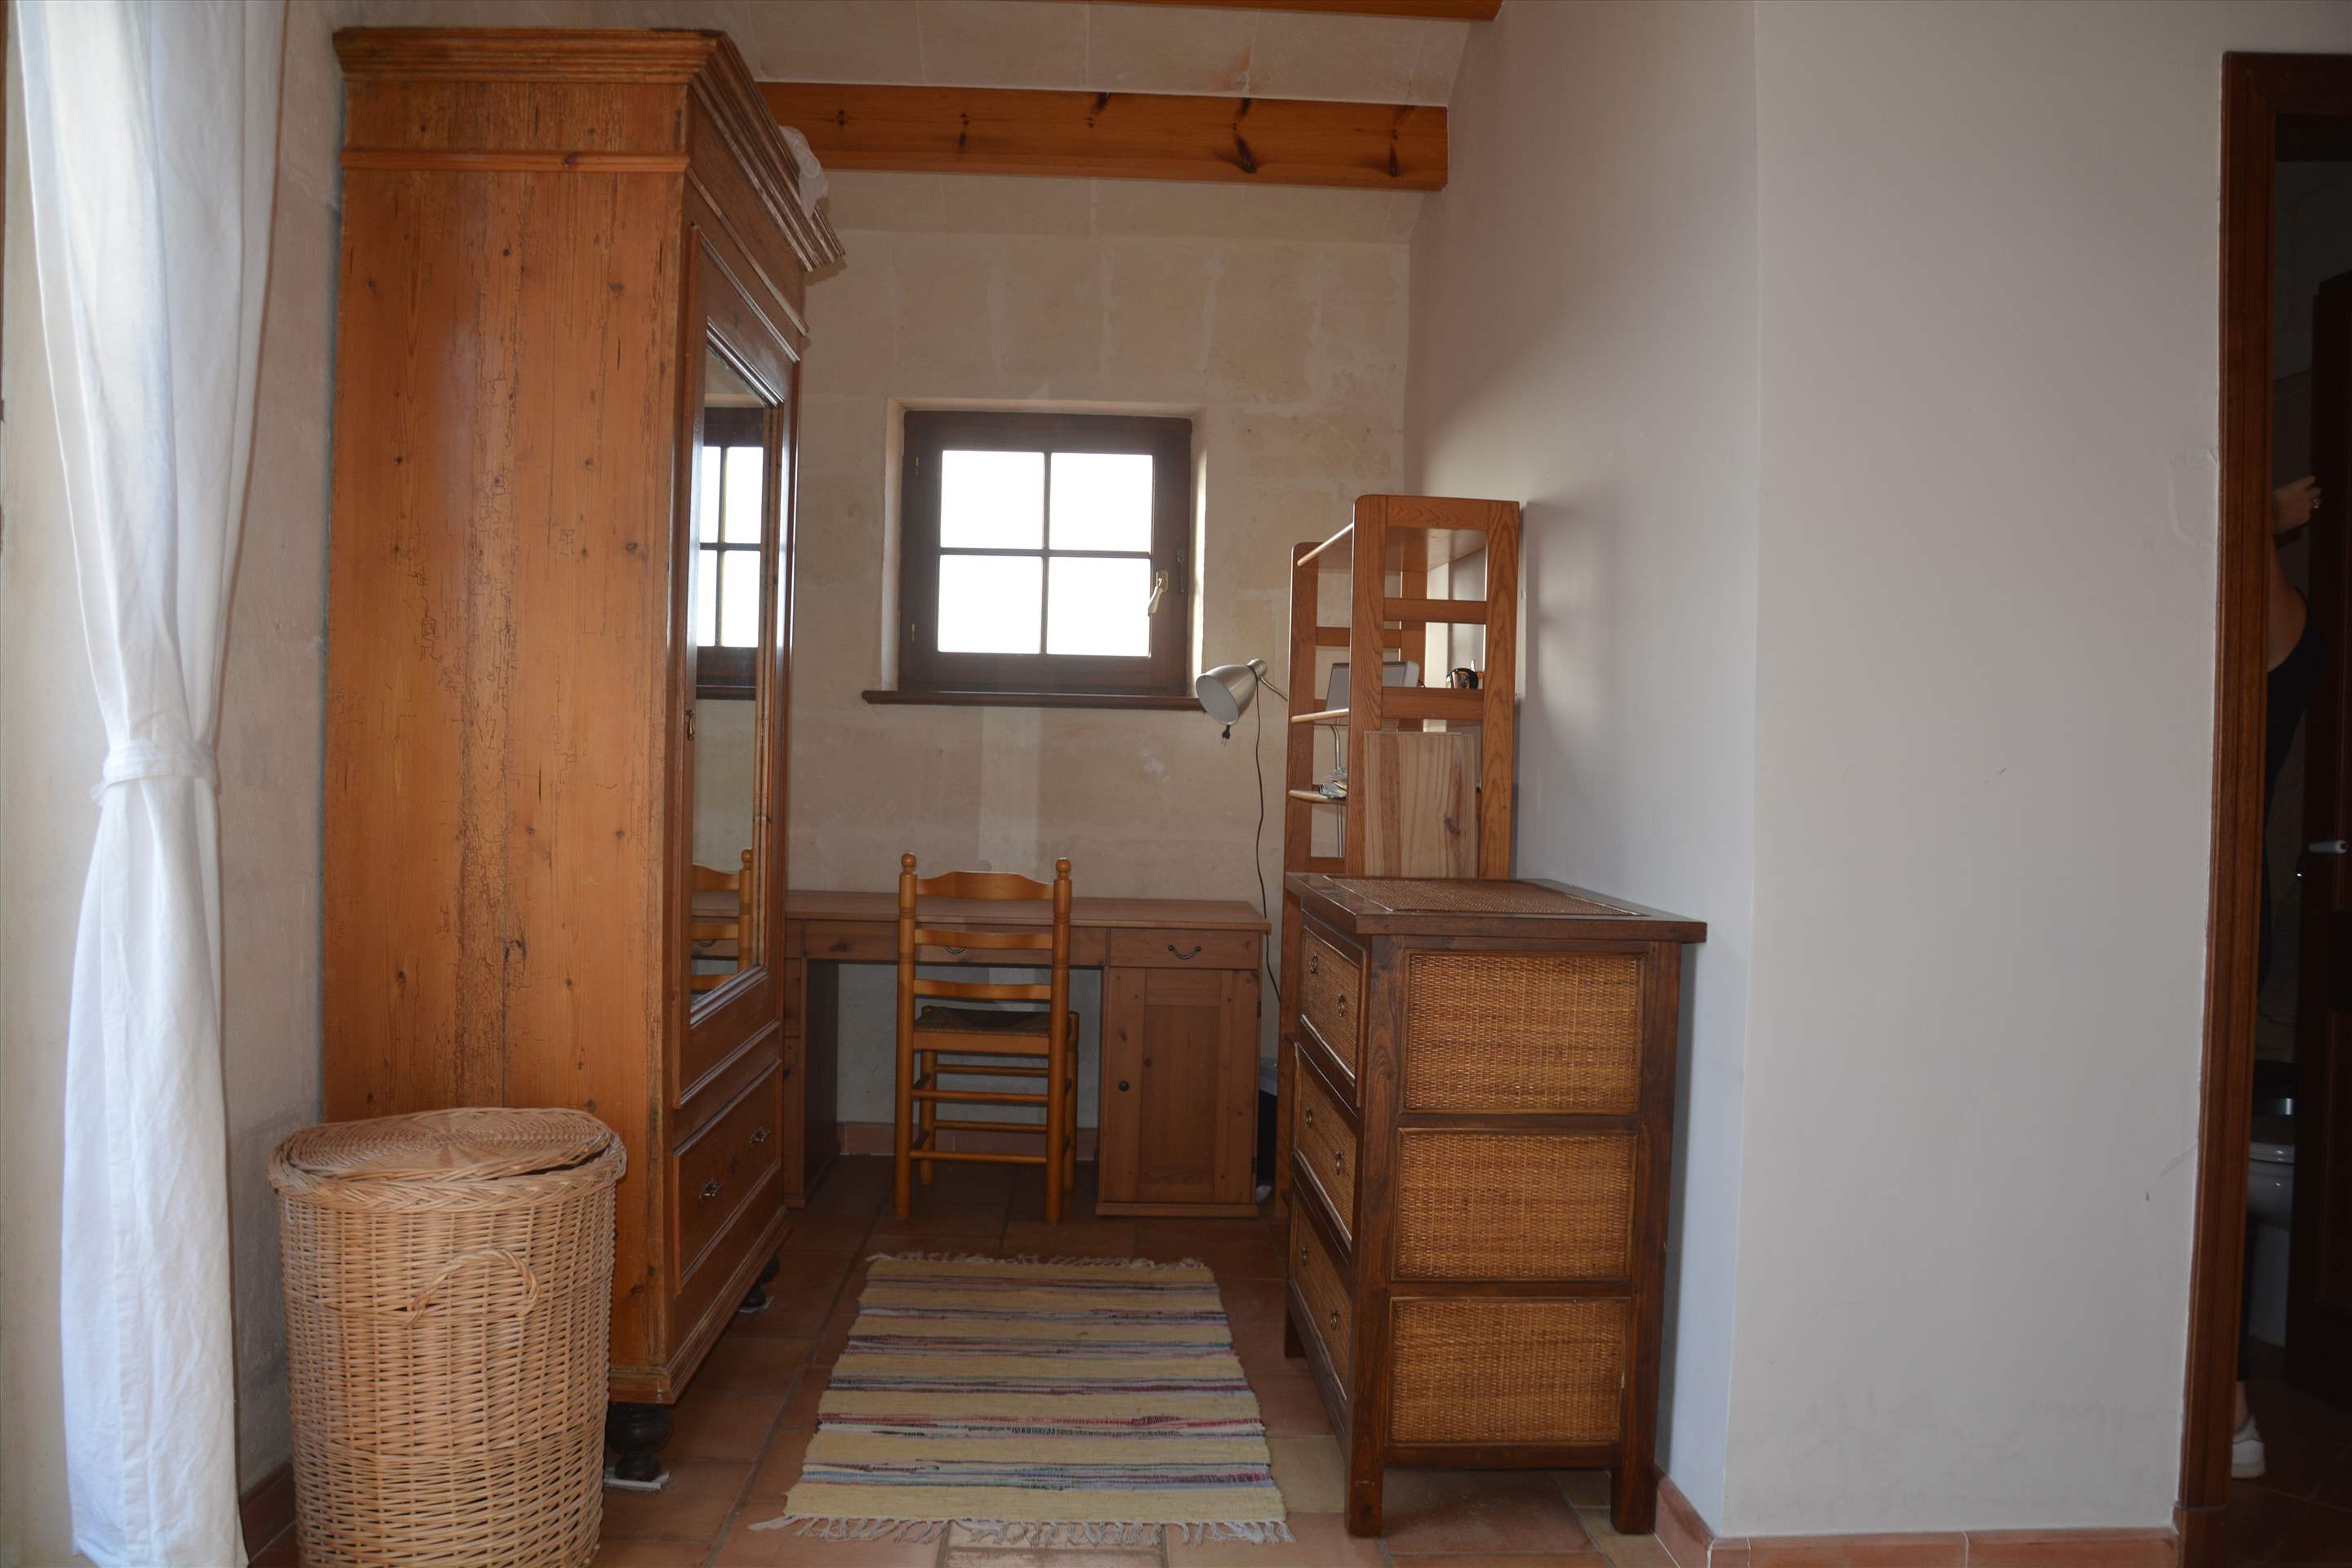 Les Arcs, 5 bedroom villa in Mahon, San Luis & South East, Menorca Photo #18